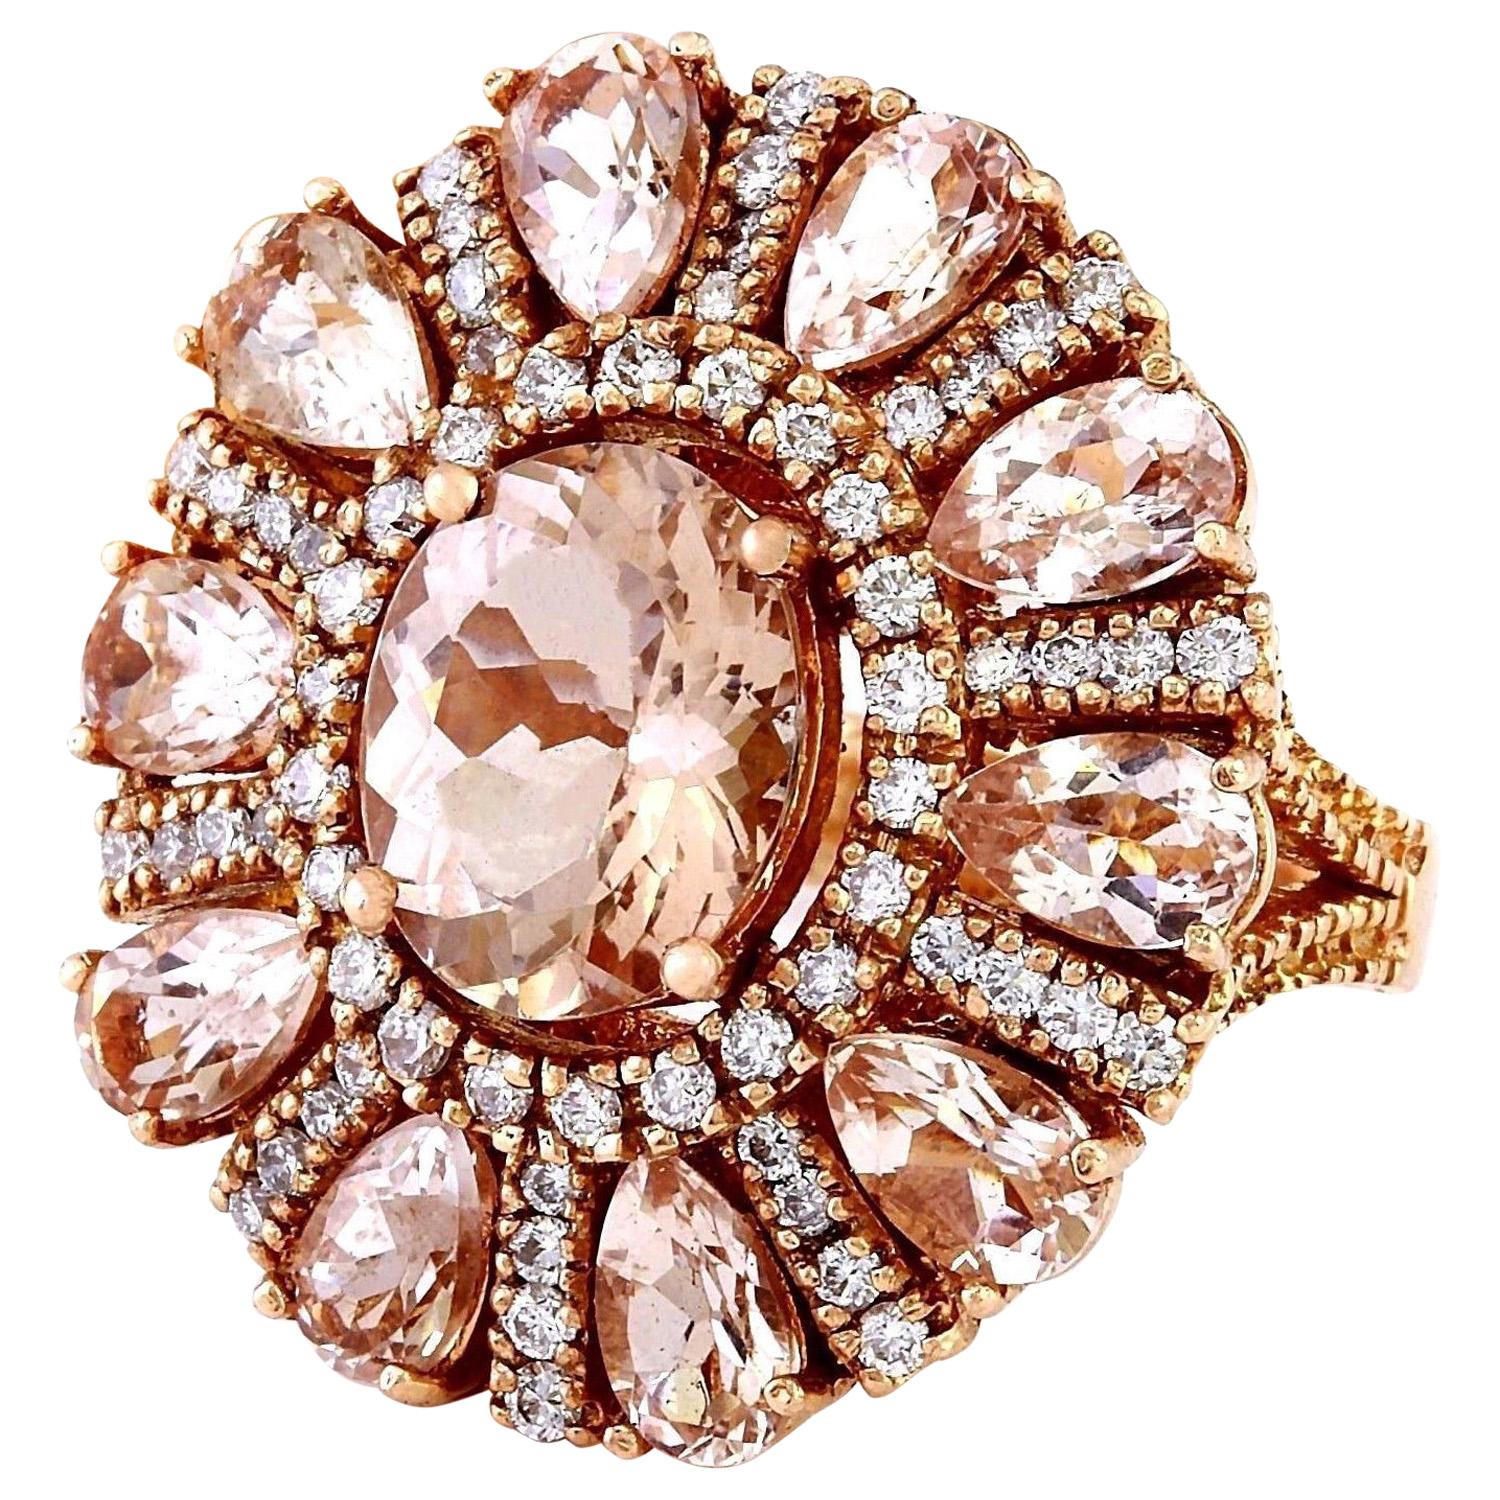 11.50 Carat Natural Morganite 14K Solid Rose Gold Diamond Ring
 Item Type: Ring
 Item Style: Cocktail
 Material: 14K Rose Gold
 Mainstone: Morganite
 Stone Color: Peach
 CenterStone Weight: 8.00 Carat
 SideStones Weight: 2.70 Carat
 Stone Shape: